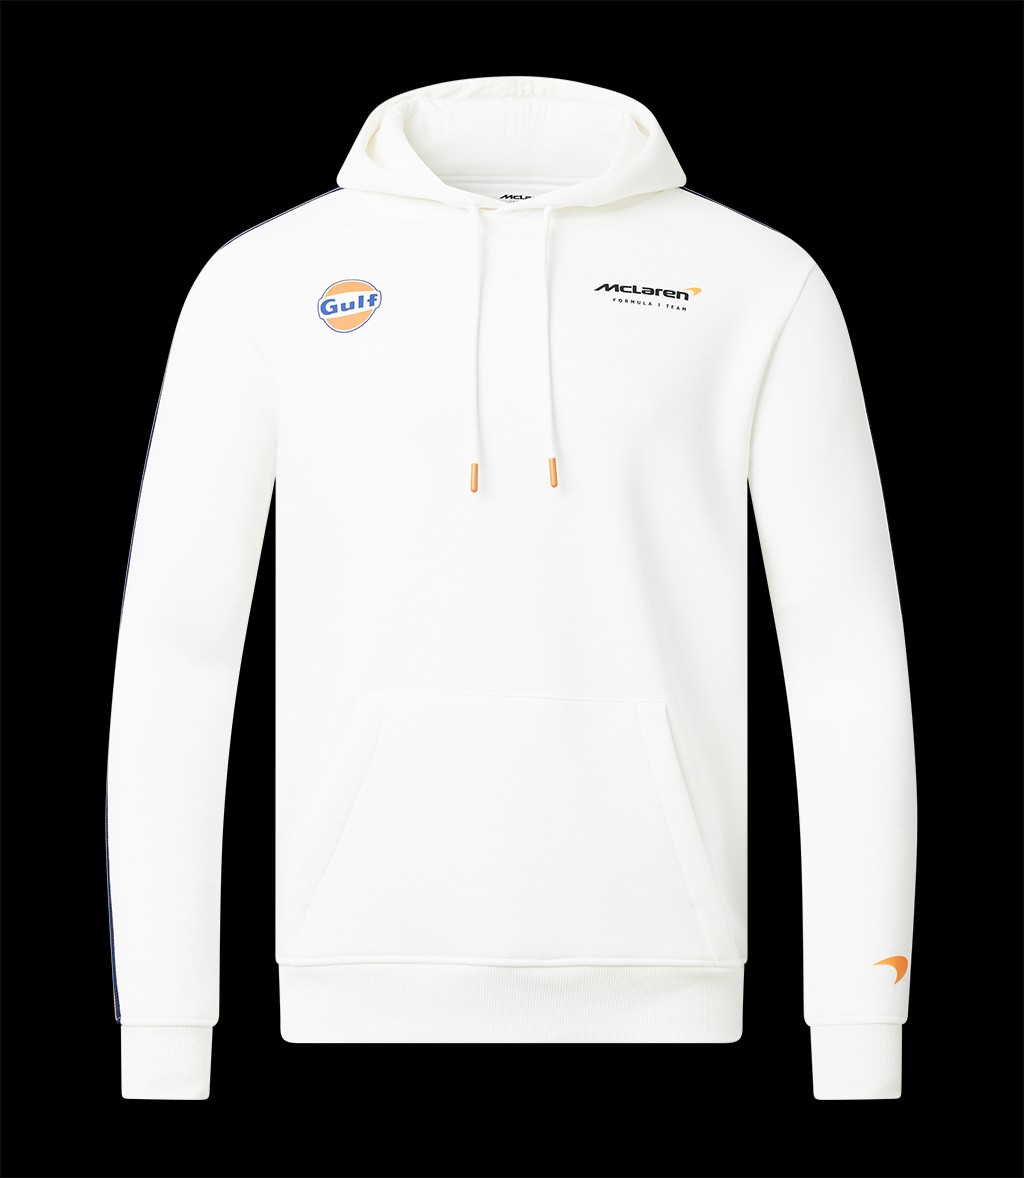 Gulf McLaren Sweatshirt F1 Team Norris Piastri Hoodie White TM3413 - men